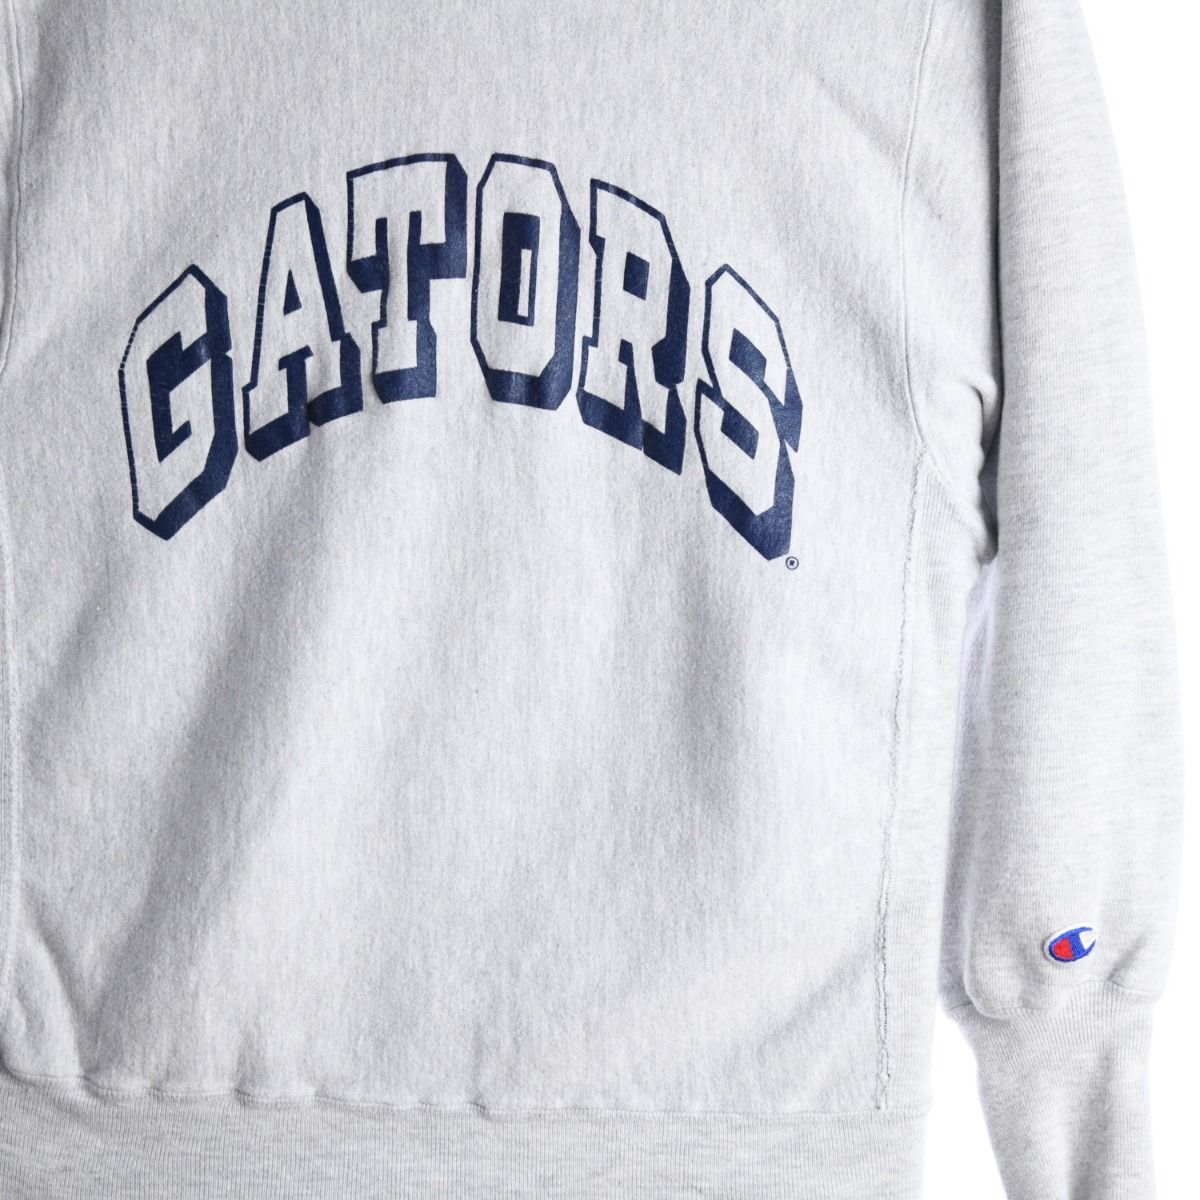 Champion Gators Early 1990s Reverse Weave Sweatshirt